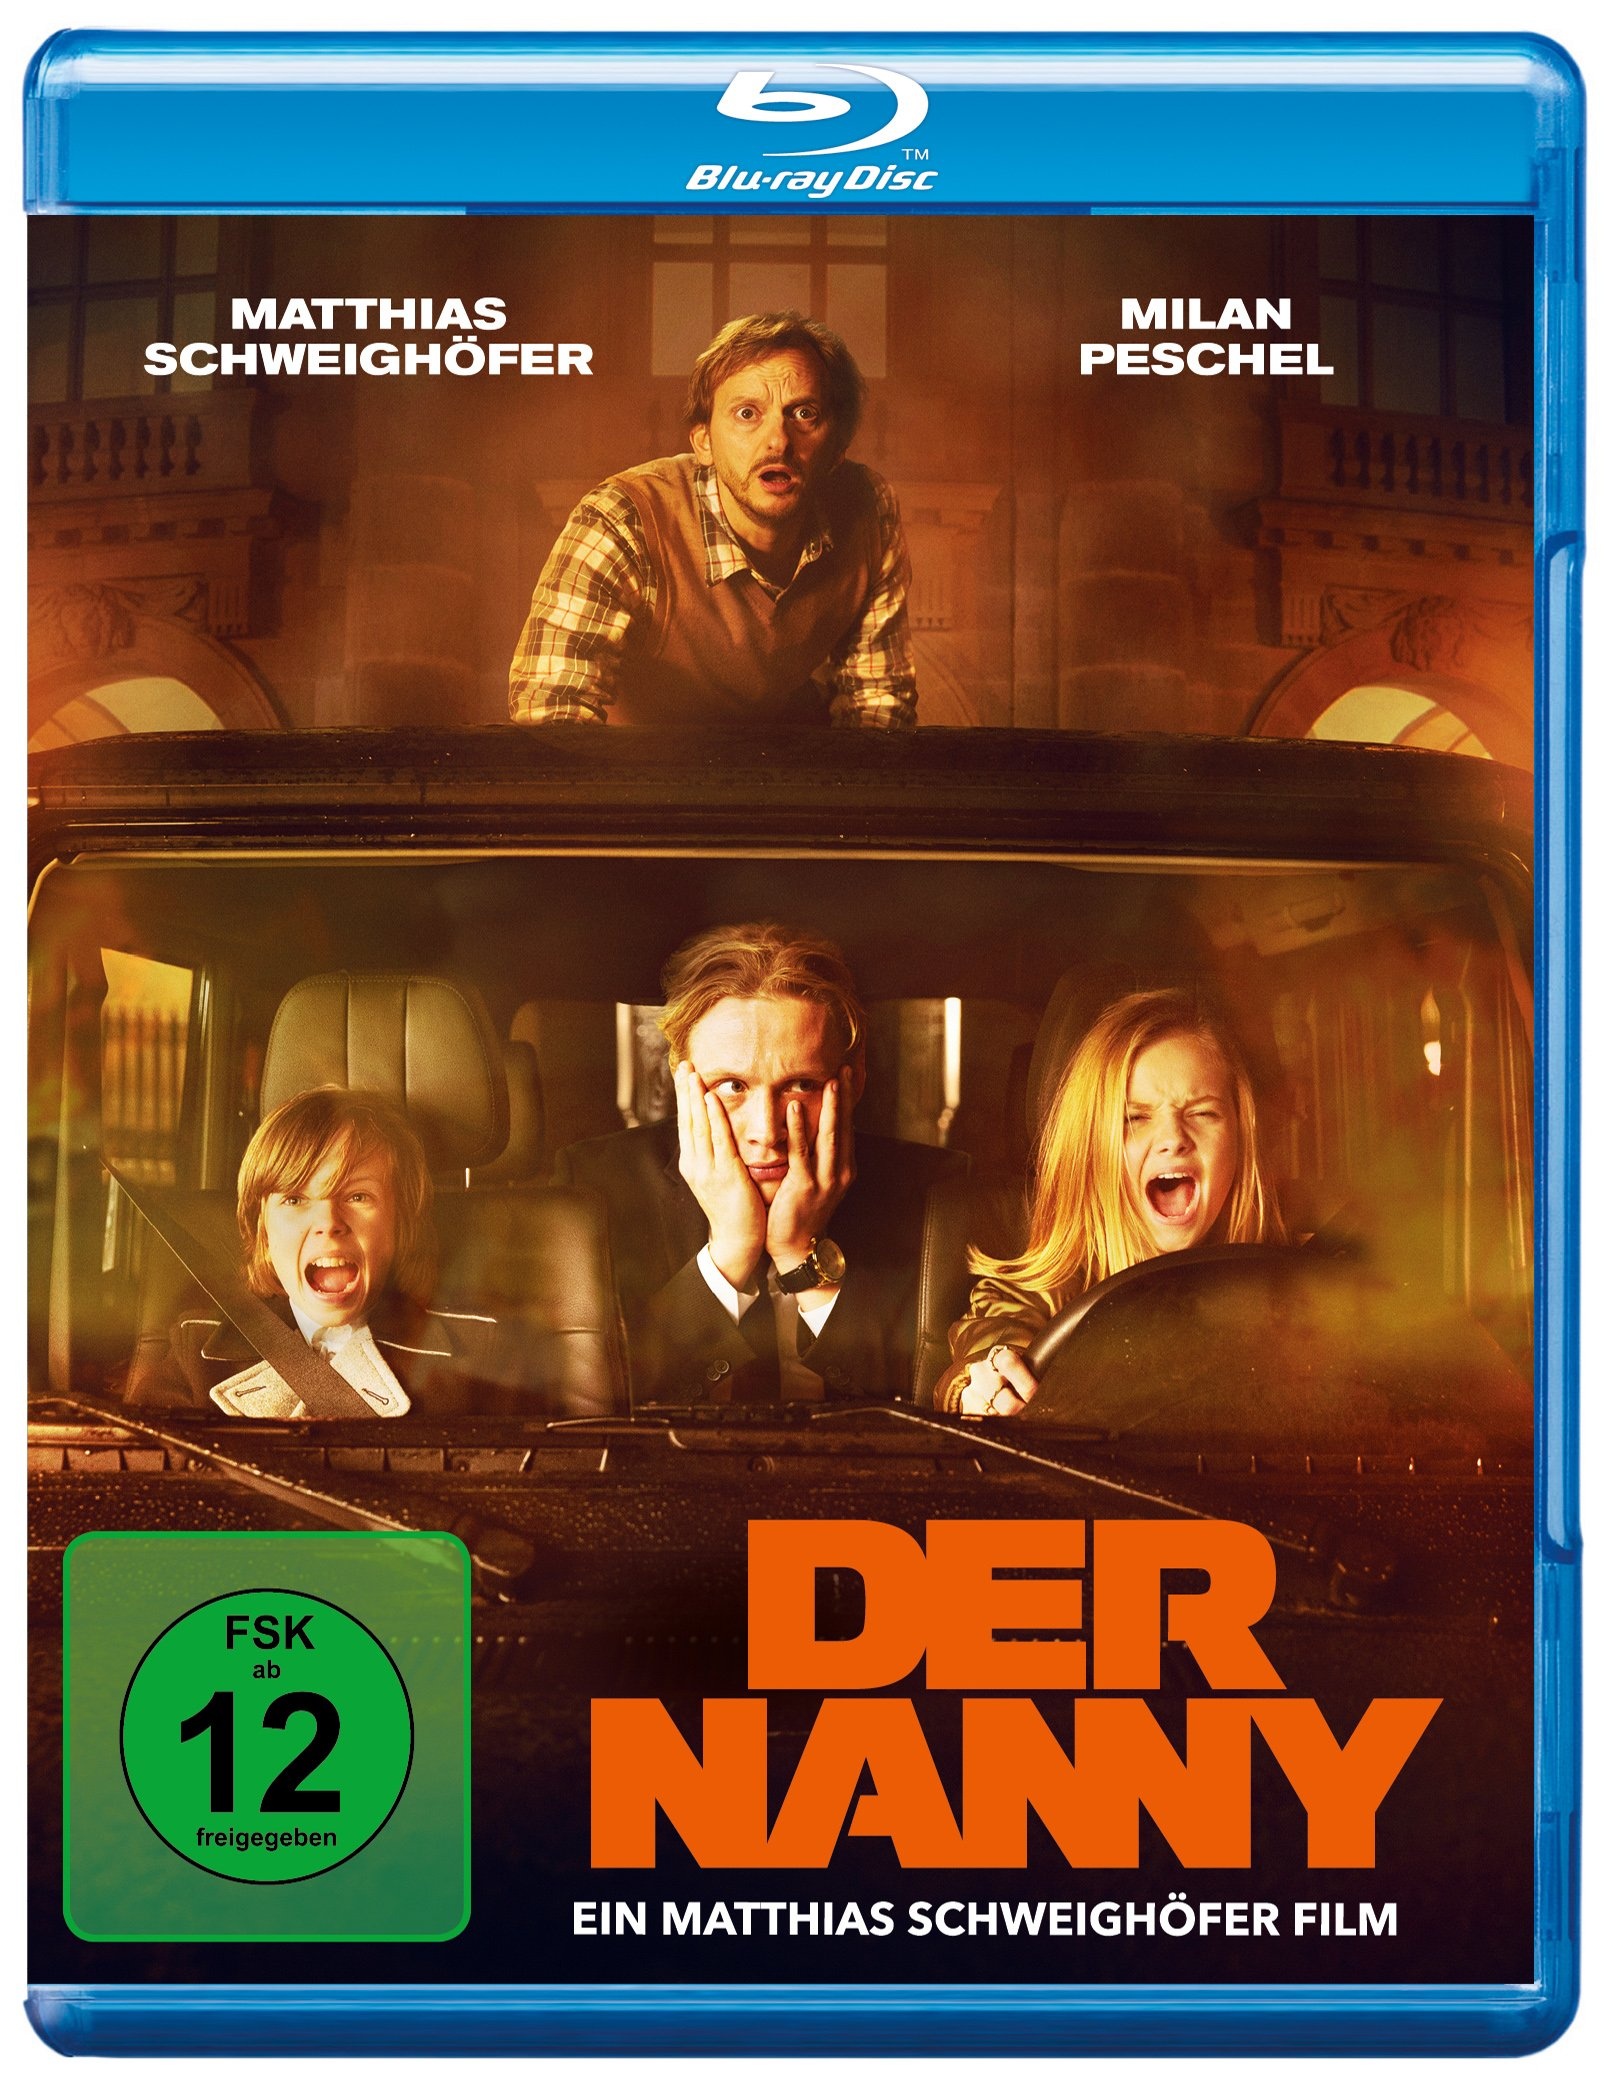 Der Nanny [Blu-ray] (Neu differenzbesteuert)